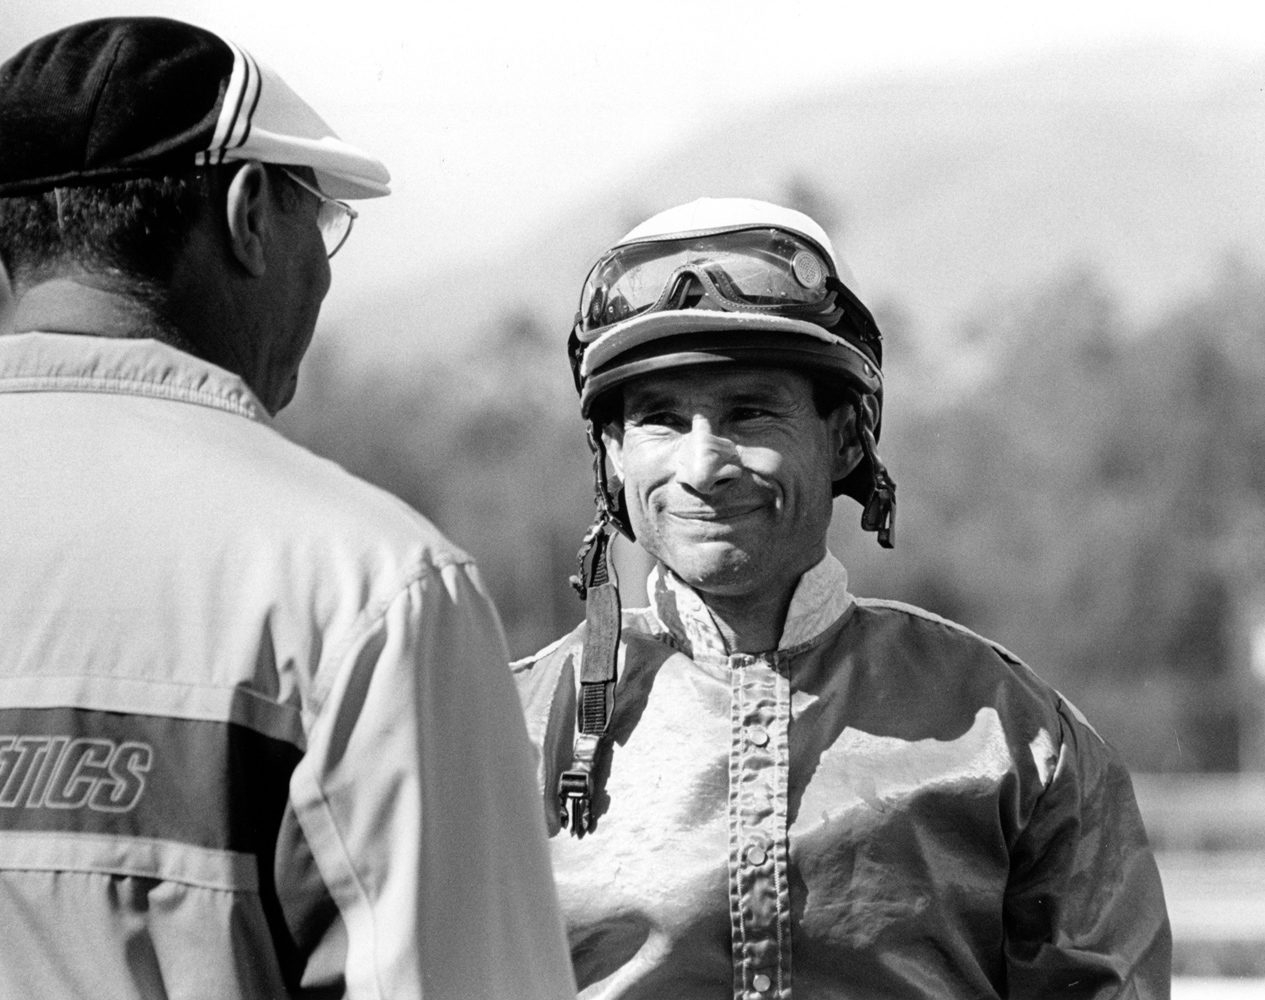 Alex Solis after five consecutive wins at Santa Anita on Feb. 20, 2006 (Bill Mochon/Museum Collection)